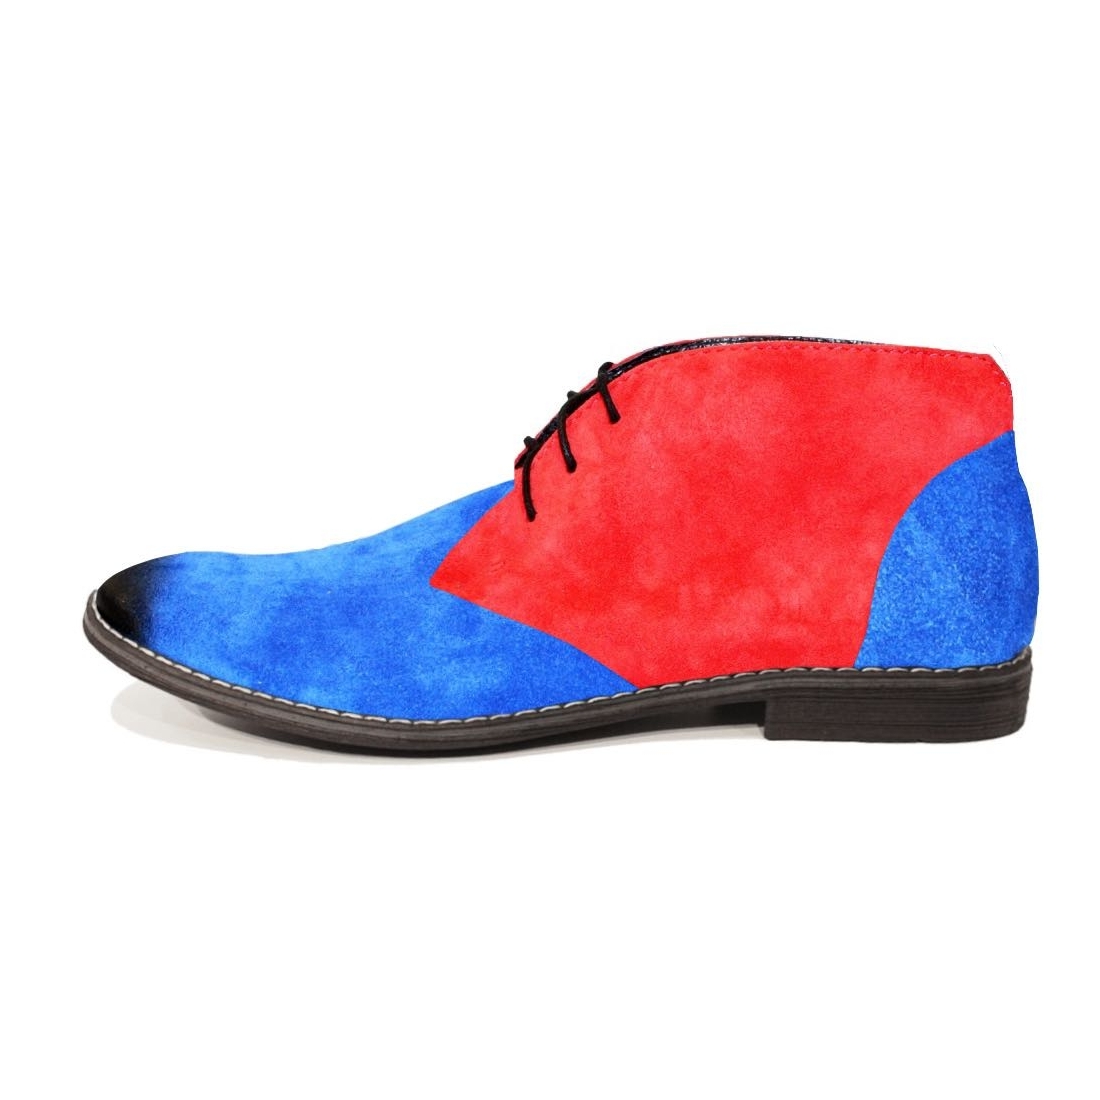 Modello Sterrer - Desert Boots - Handmade Colorful Italian Leather Shoes